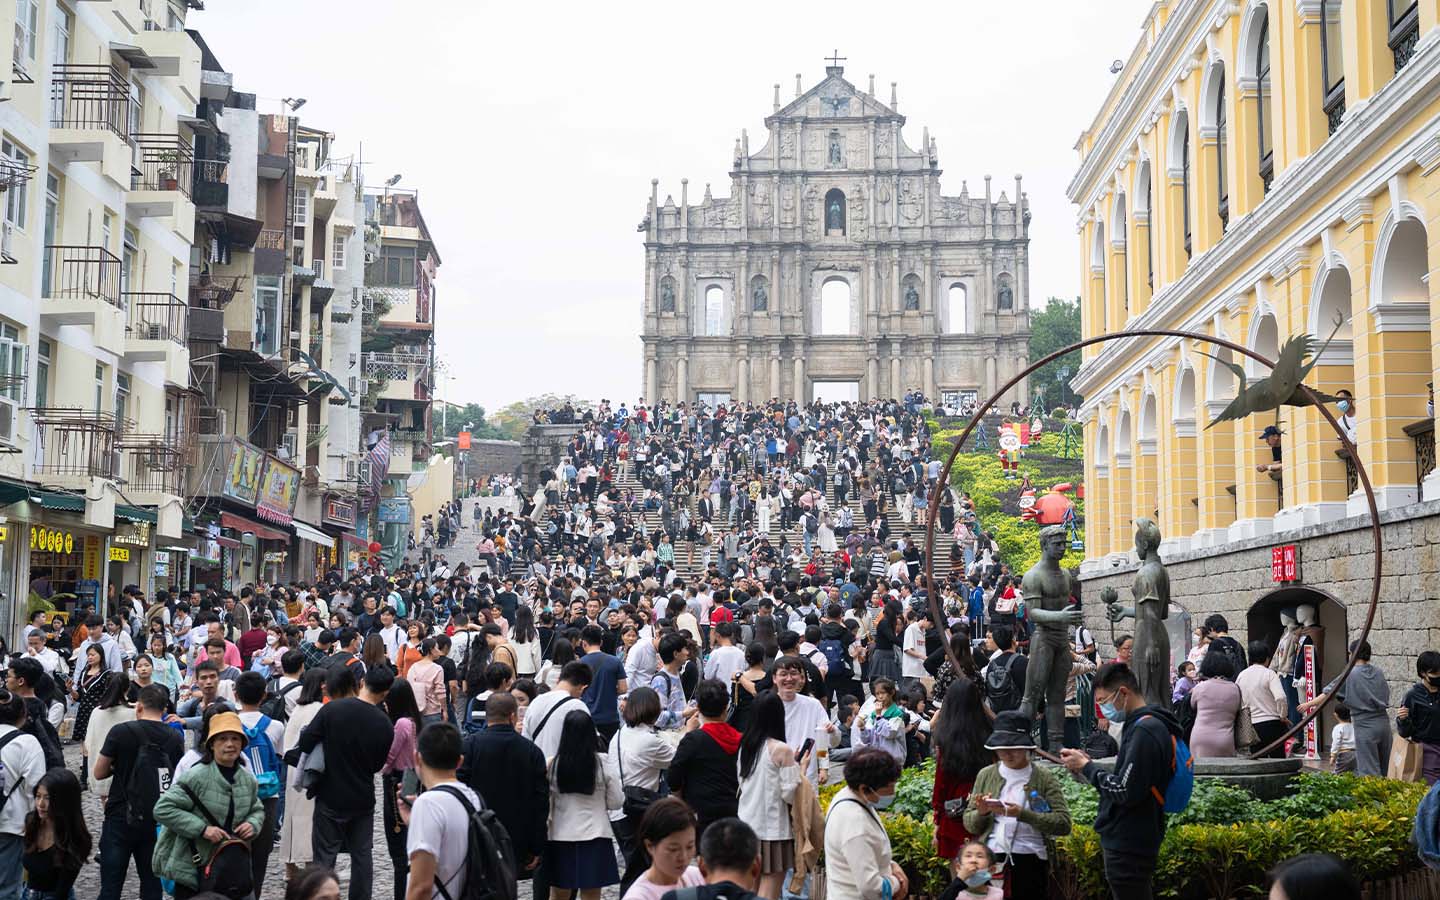 Macao is winning at tourism, warns top Hong Kong business leader